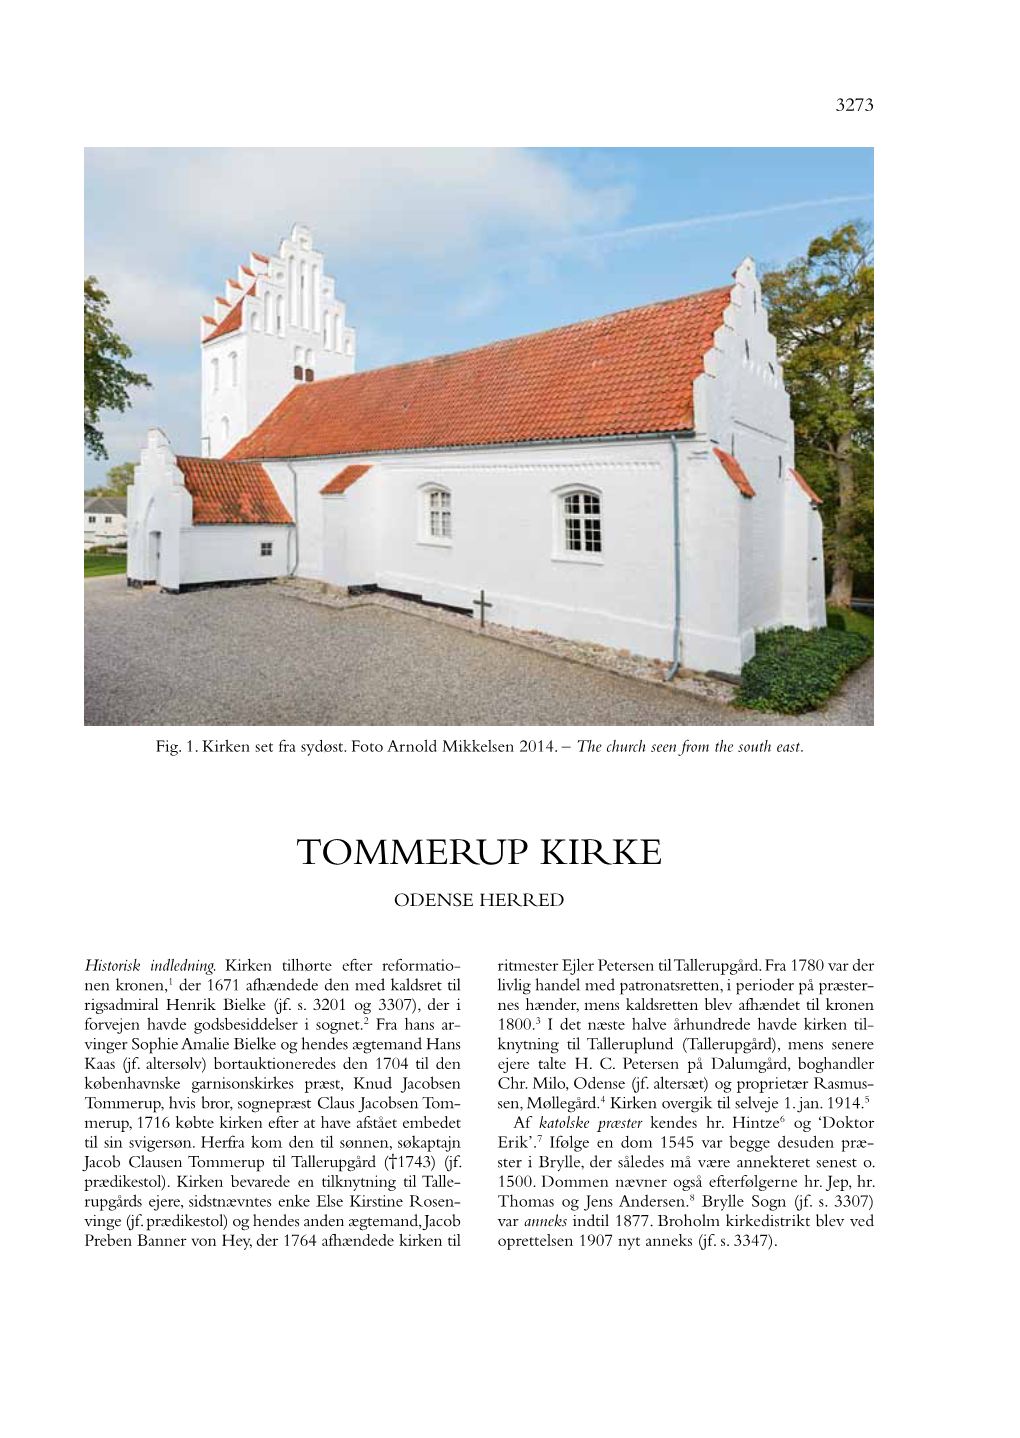 Tommerup Kirke Odense Herred